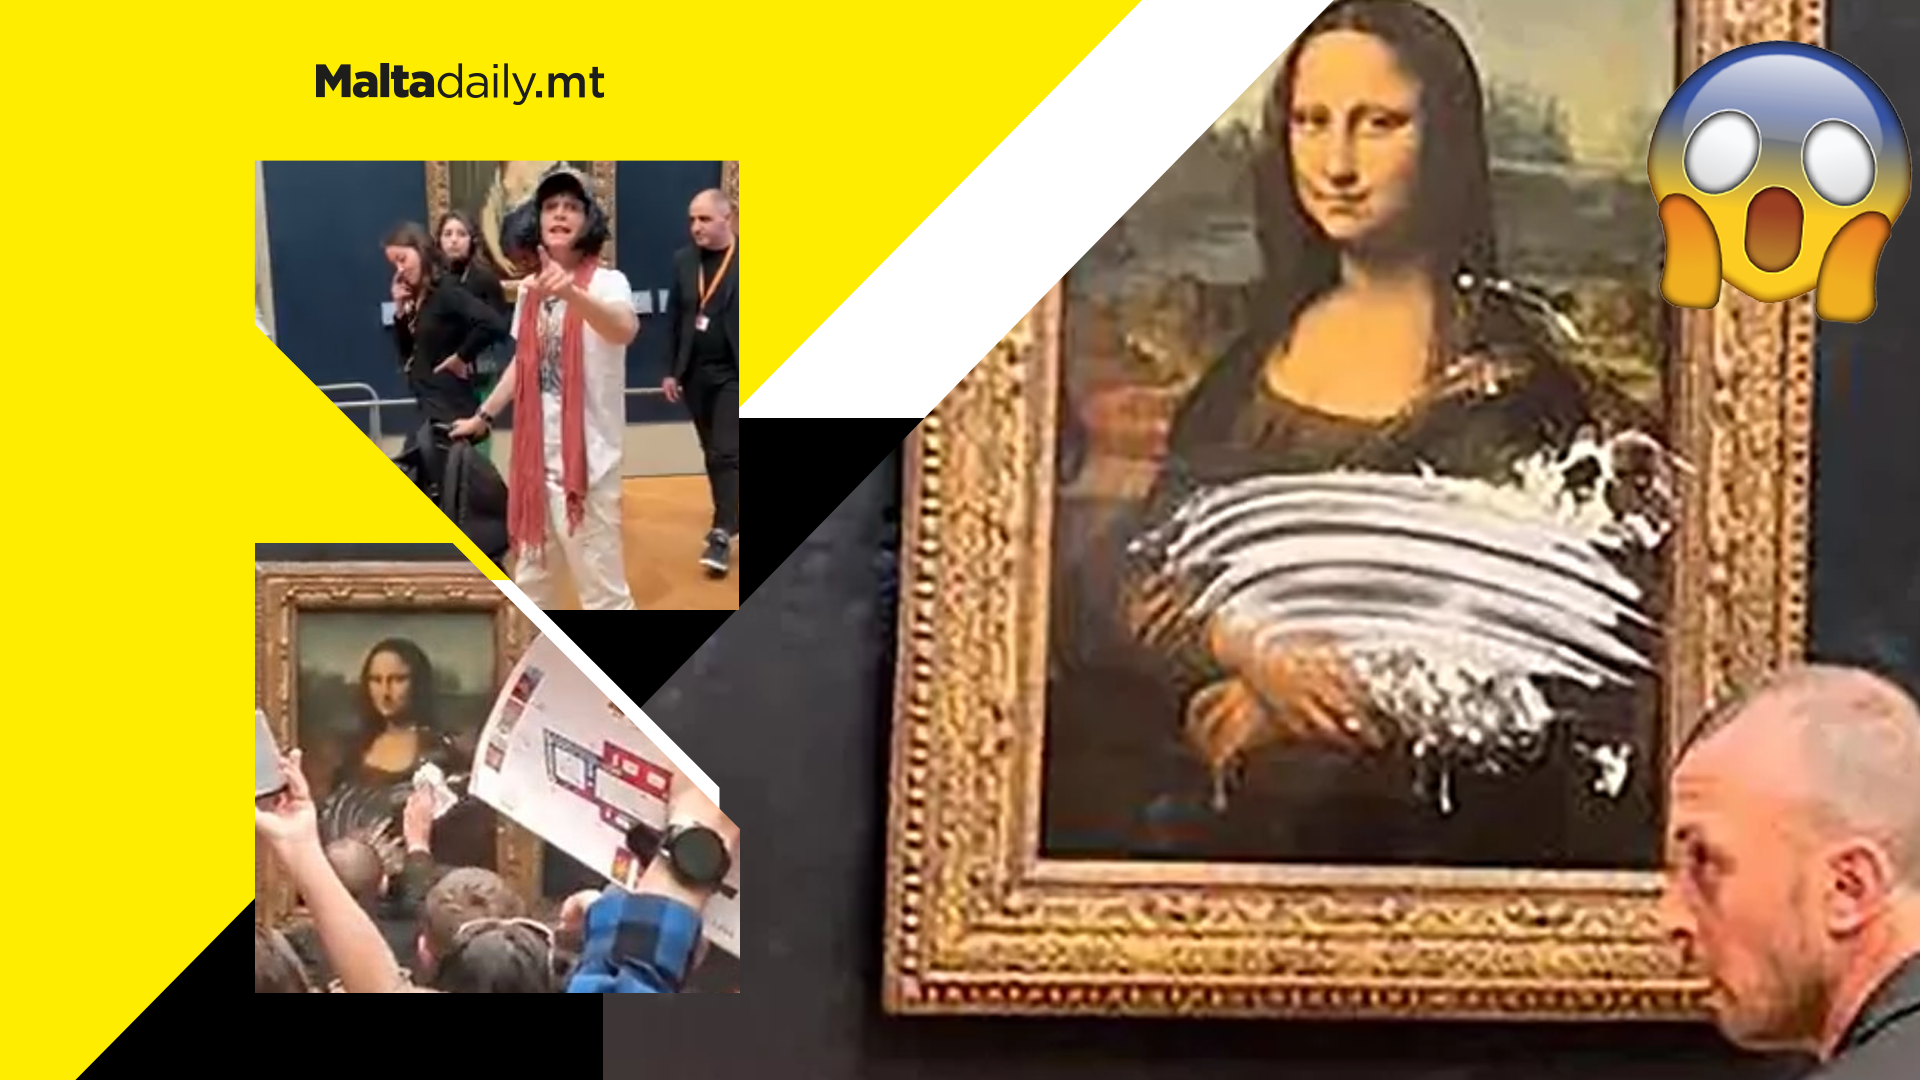 Man disguised as old woman smears cake on Mona Lisa  